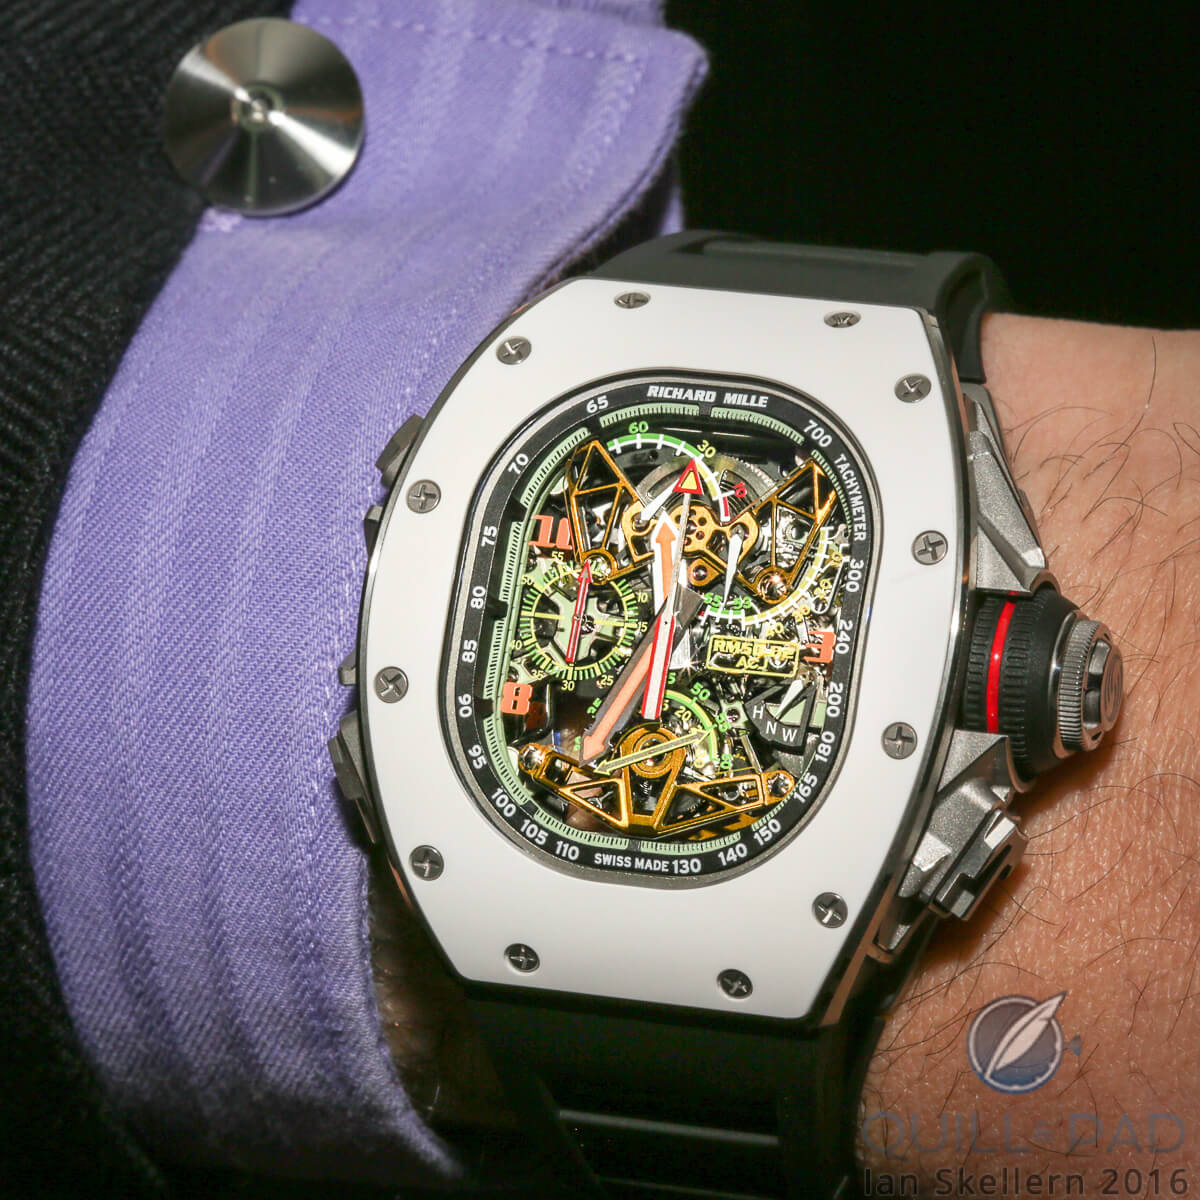 Richard Mille RM 50-02 Airbus ACJ Tourbilon Split-Seconds on the wrist